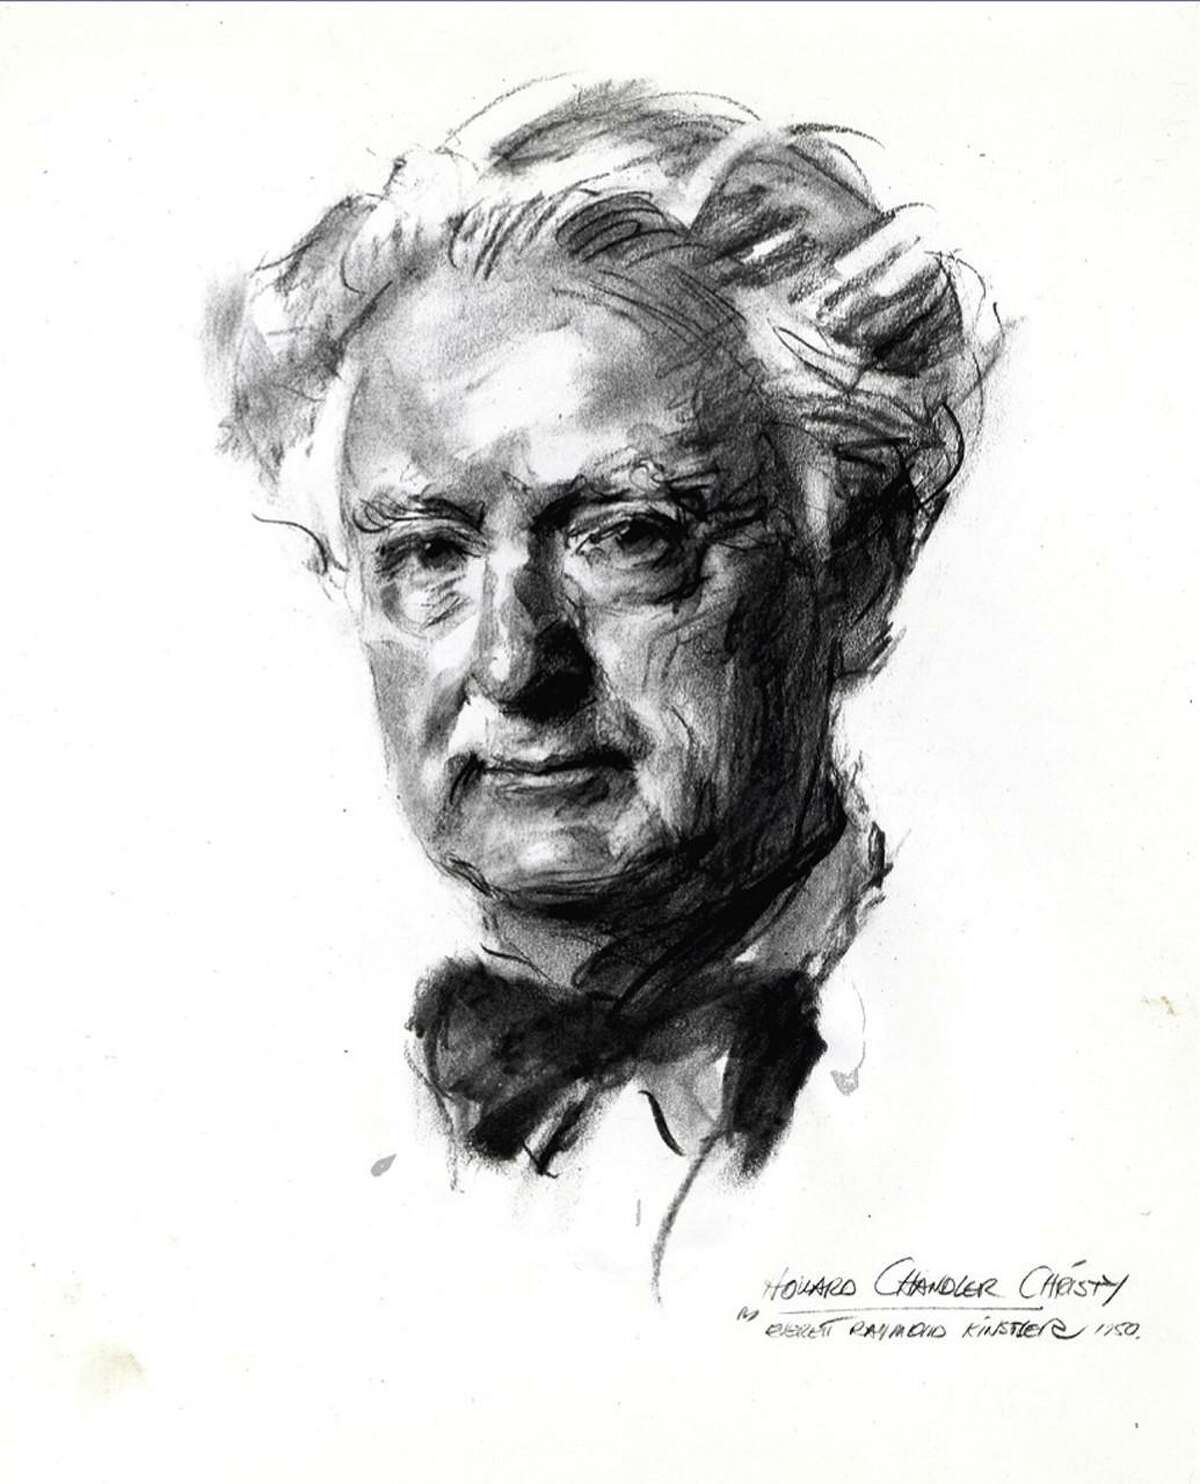 A sketch of artist Howard Chandler Christy done by artist Everett Raymond Kinstler.